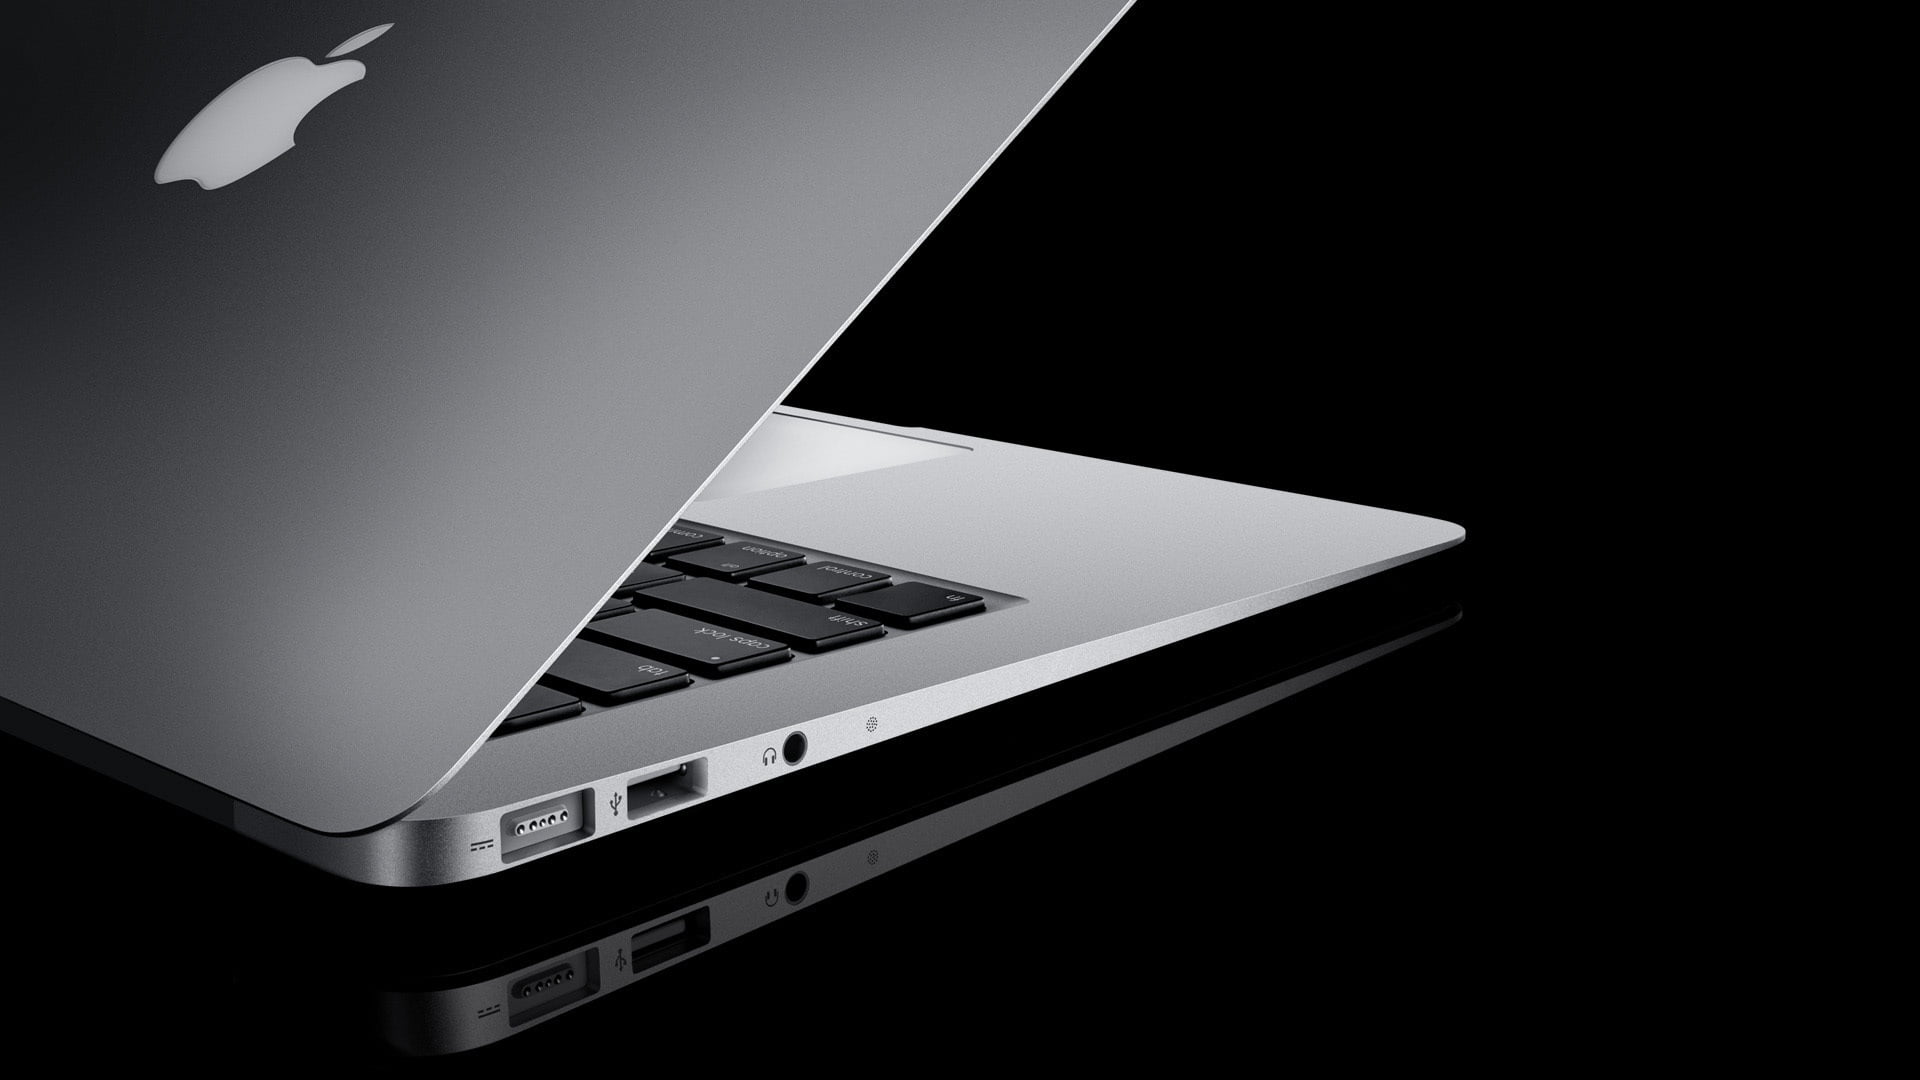 MacBook Air, laptop, apple, white, black, open, reflection, technology